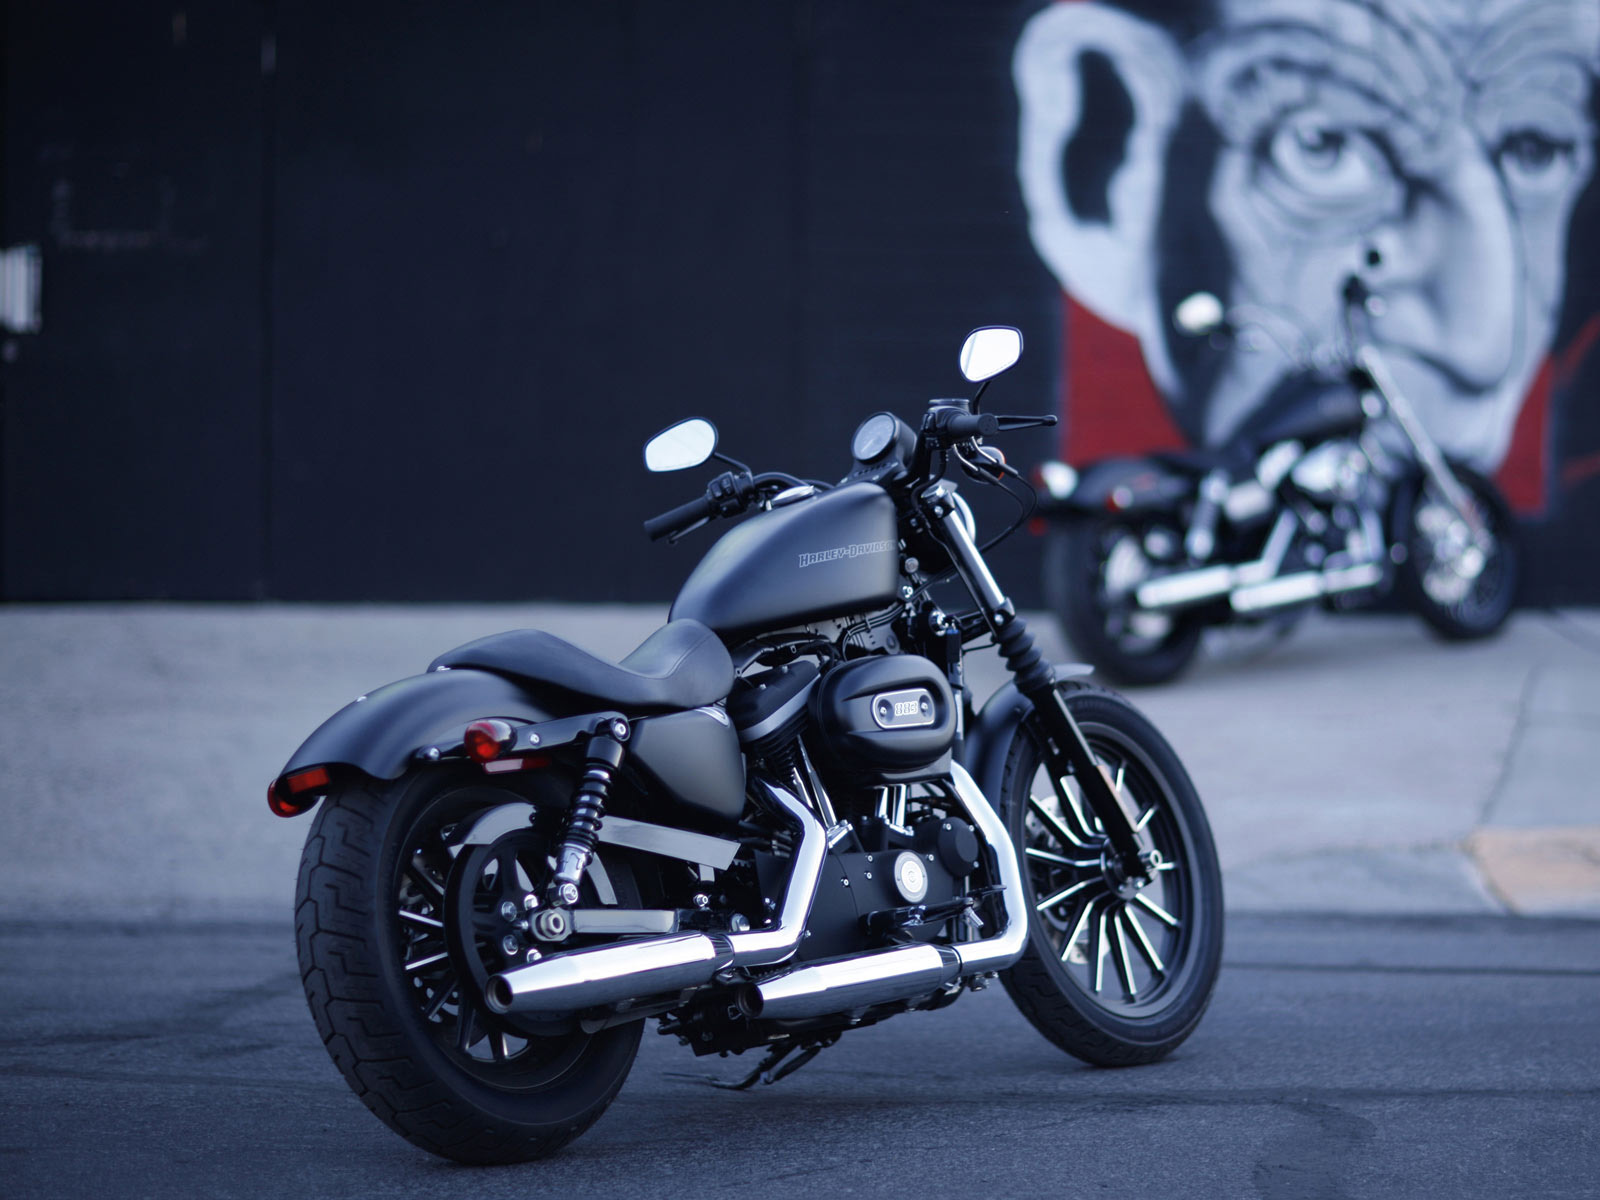 Harley Davidson HD Wallpaper Free download 